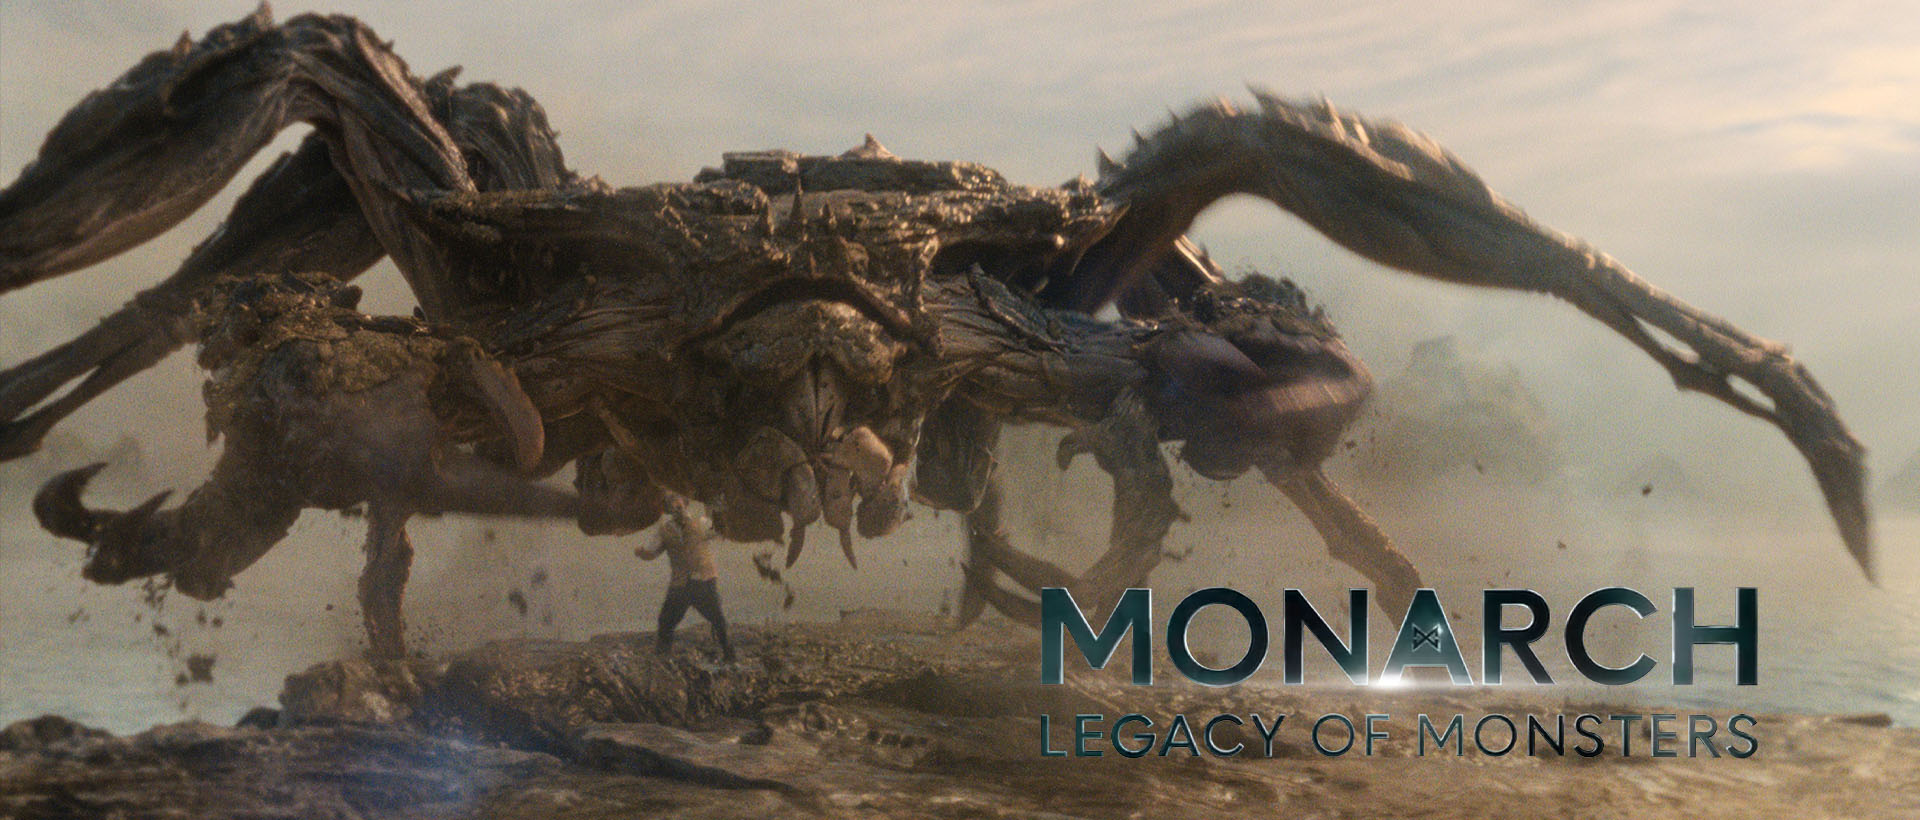 monarch legacy of monsters season 2 banner